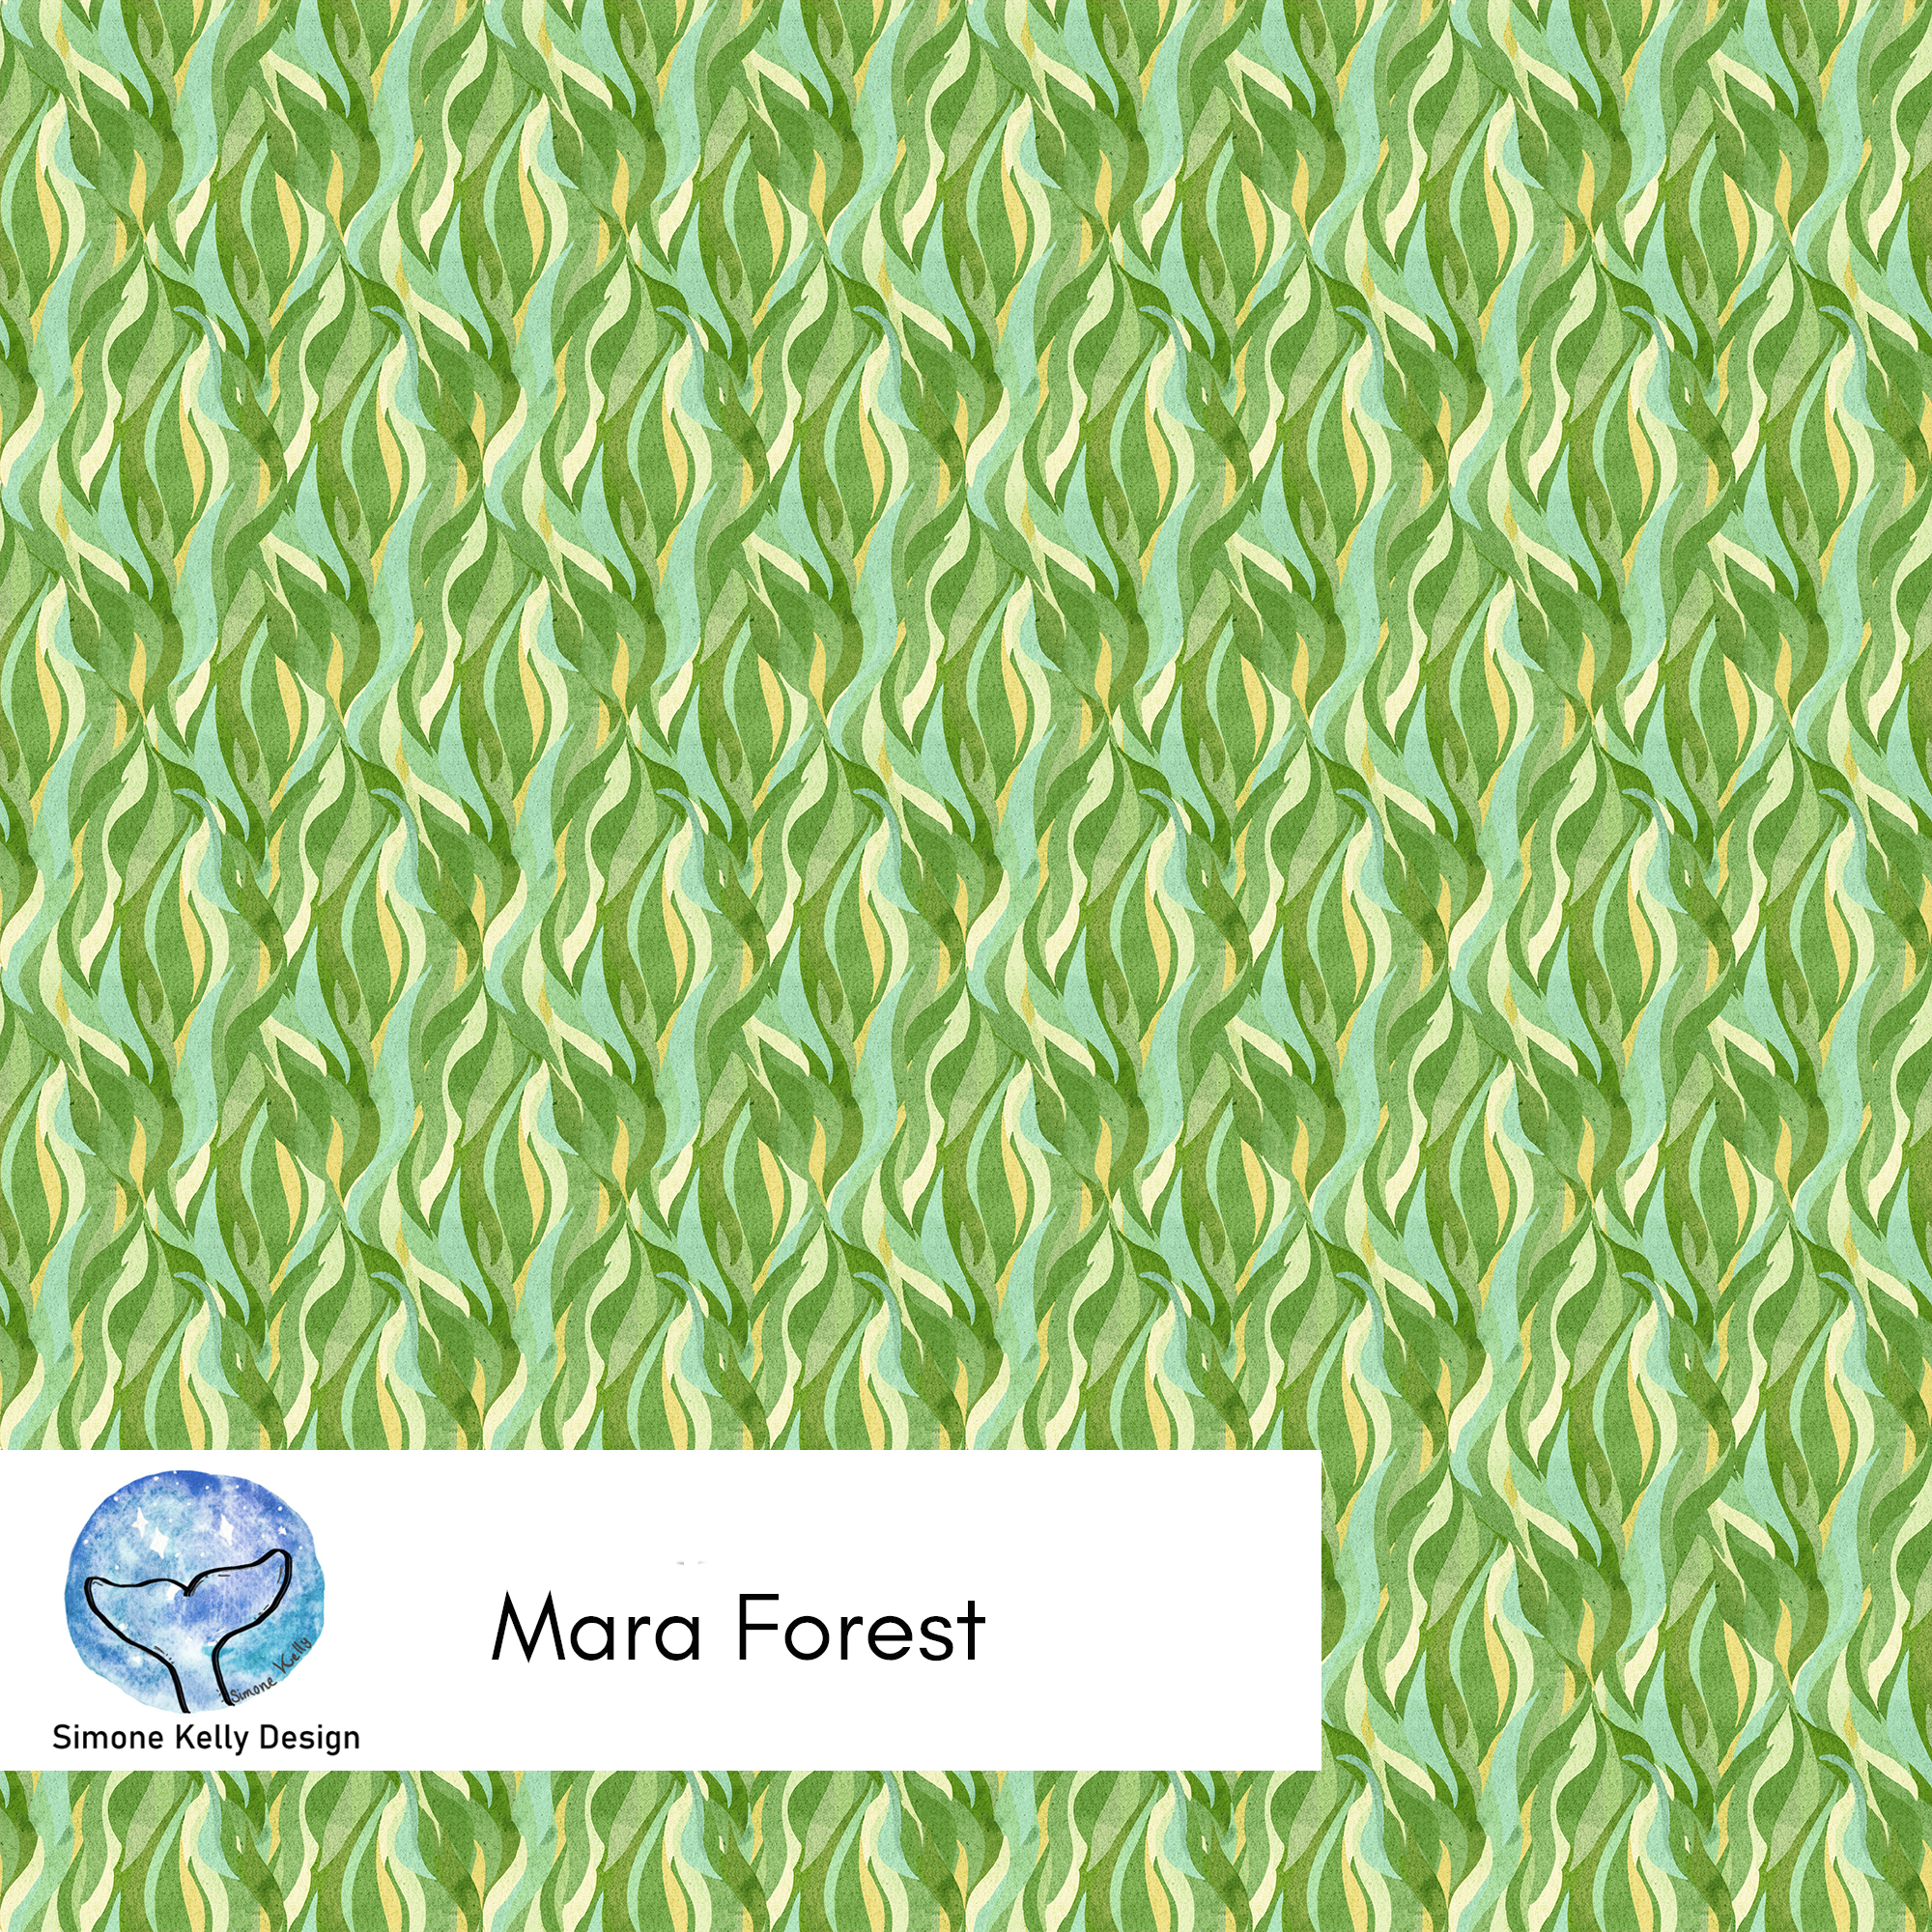 Mara Forest